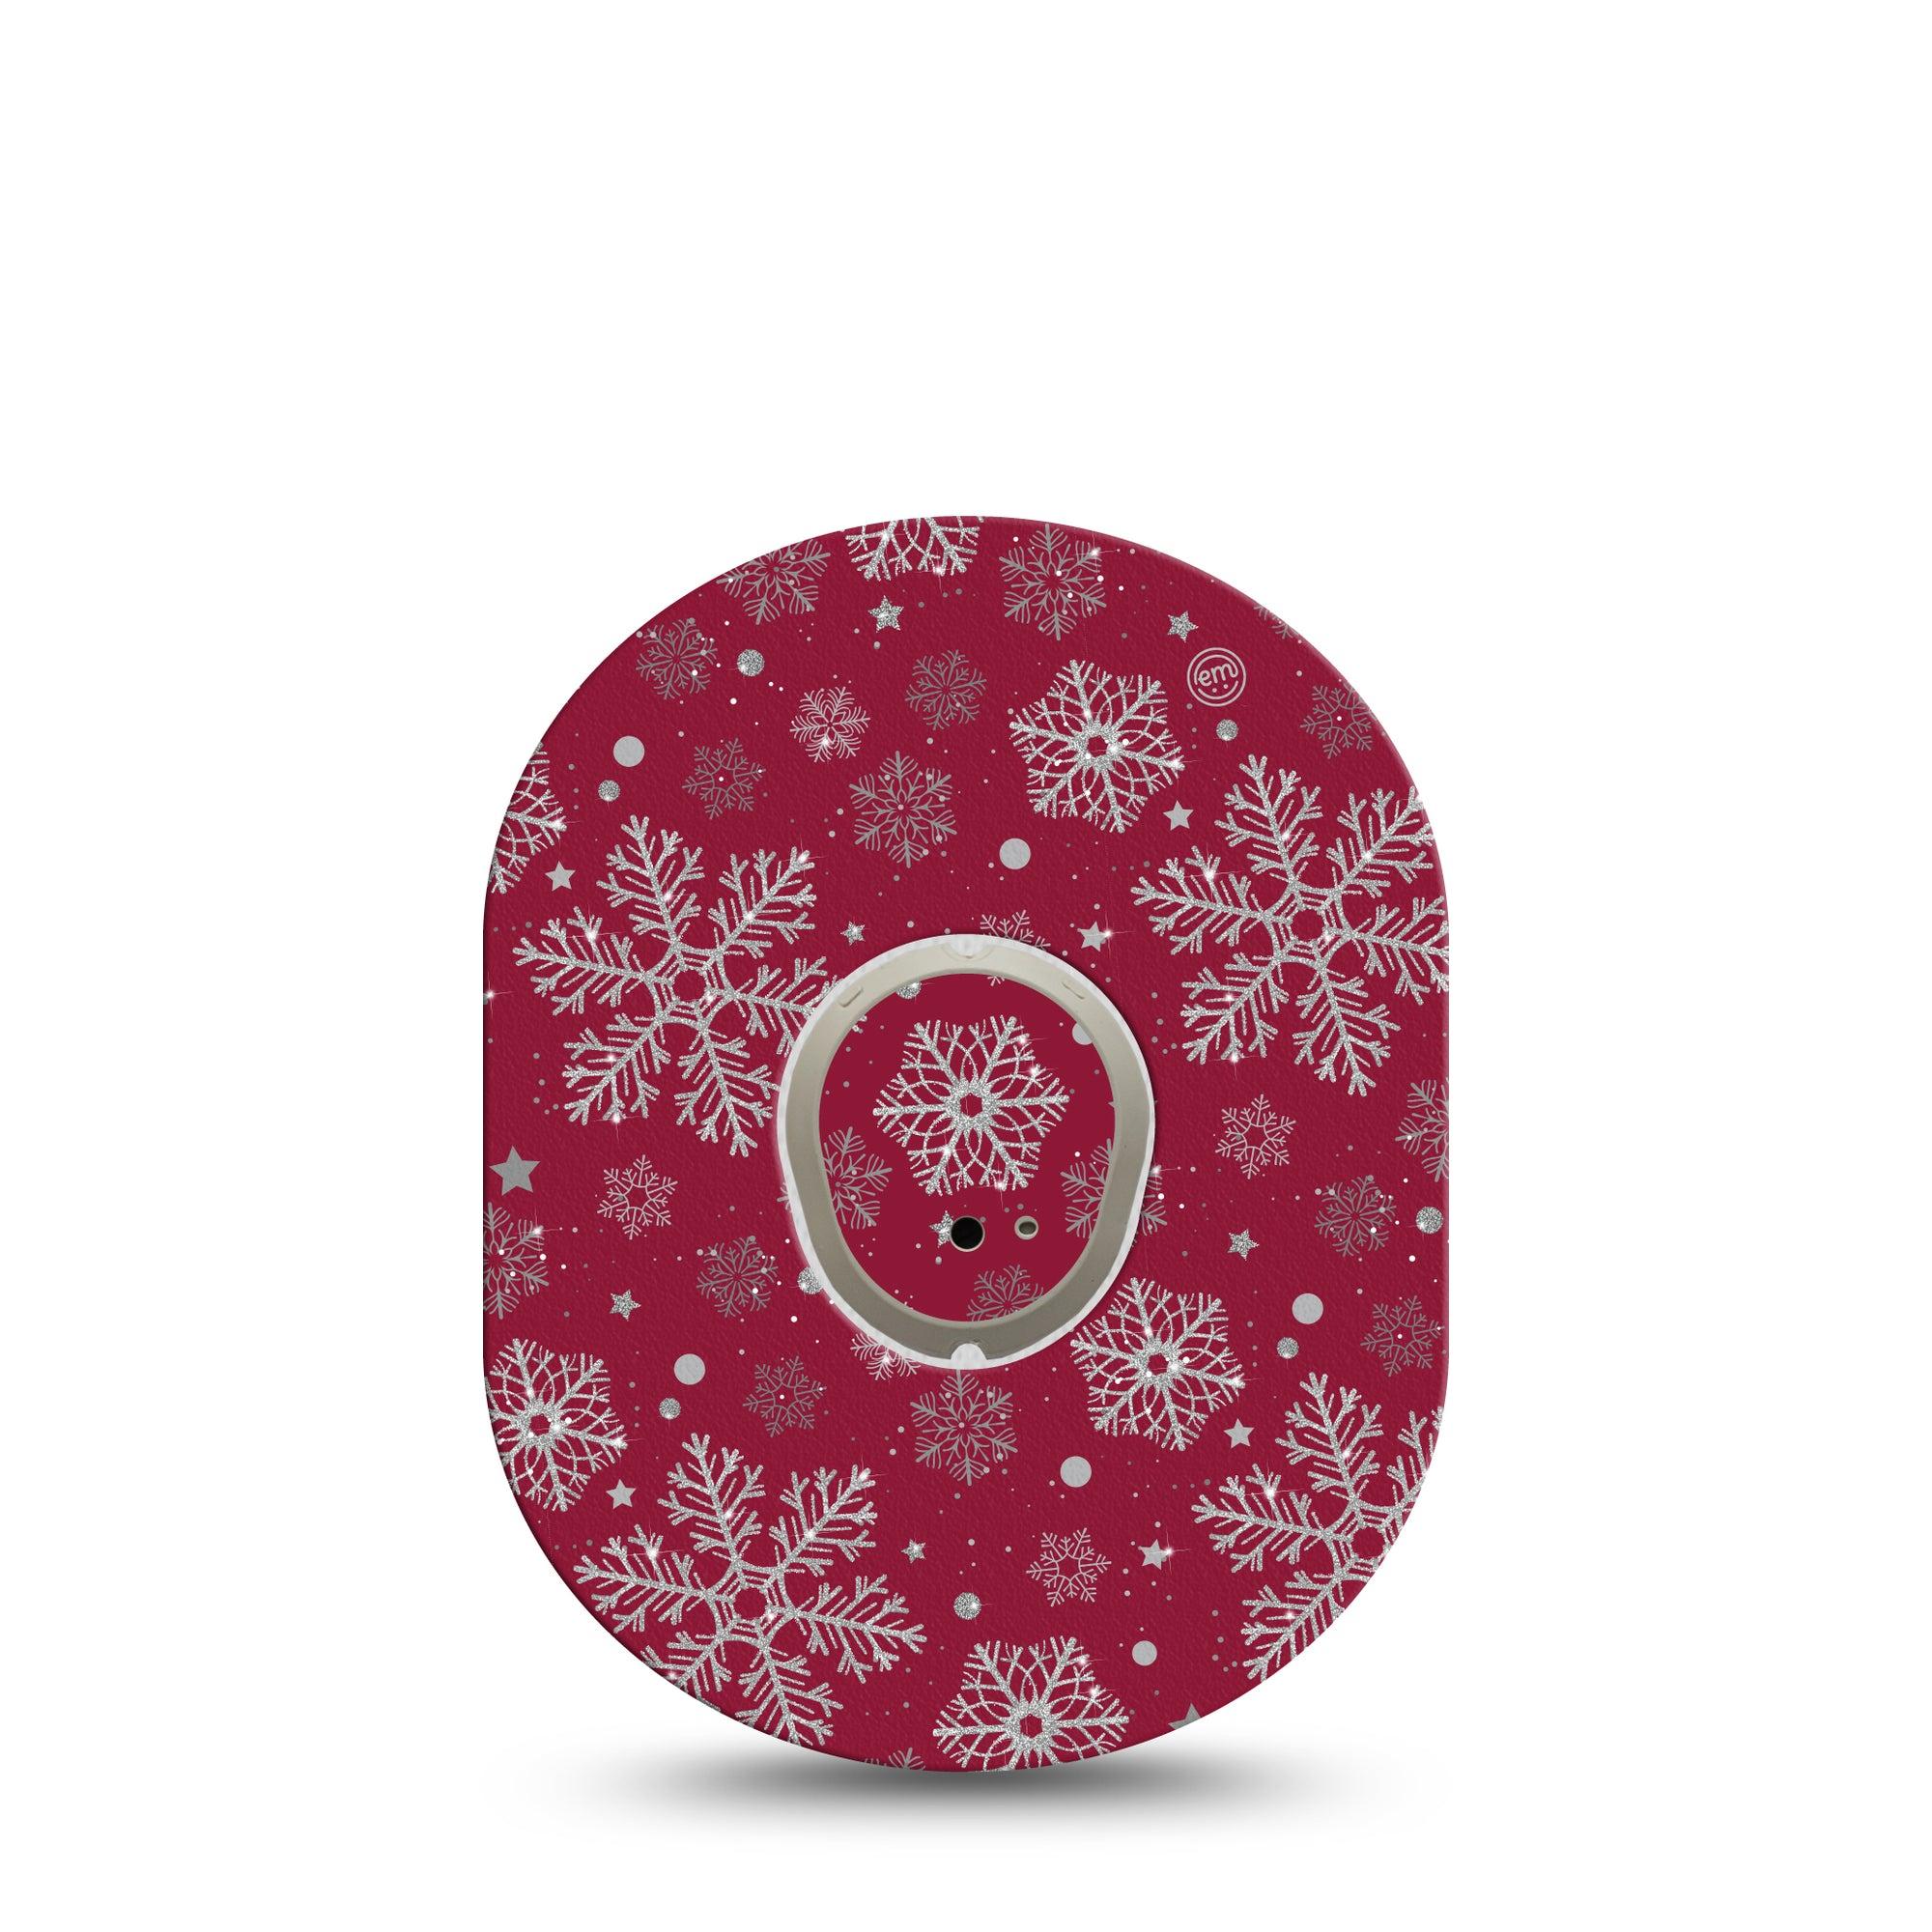 Silver Snowflakes Dexcom G7 Transmitter Sticker, Single, Winter Wonderland Themed, Dexcom G7 Transmitter Vinyl Sticker, With Dexcom G7 Tape, CGM Overlay Patch Design